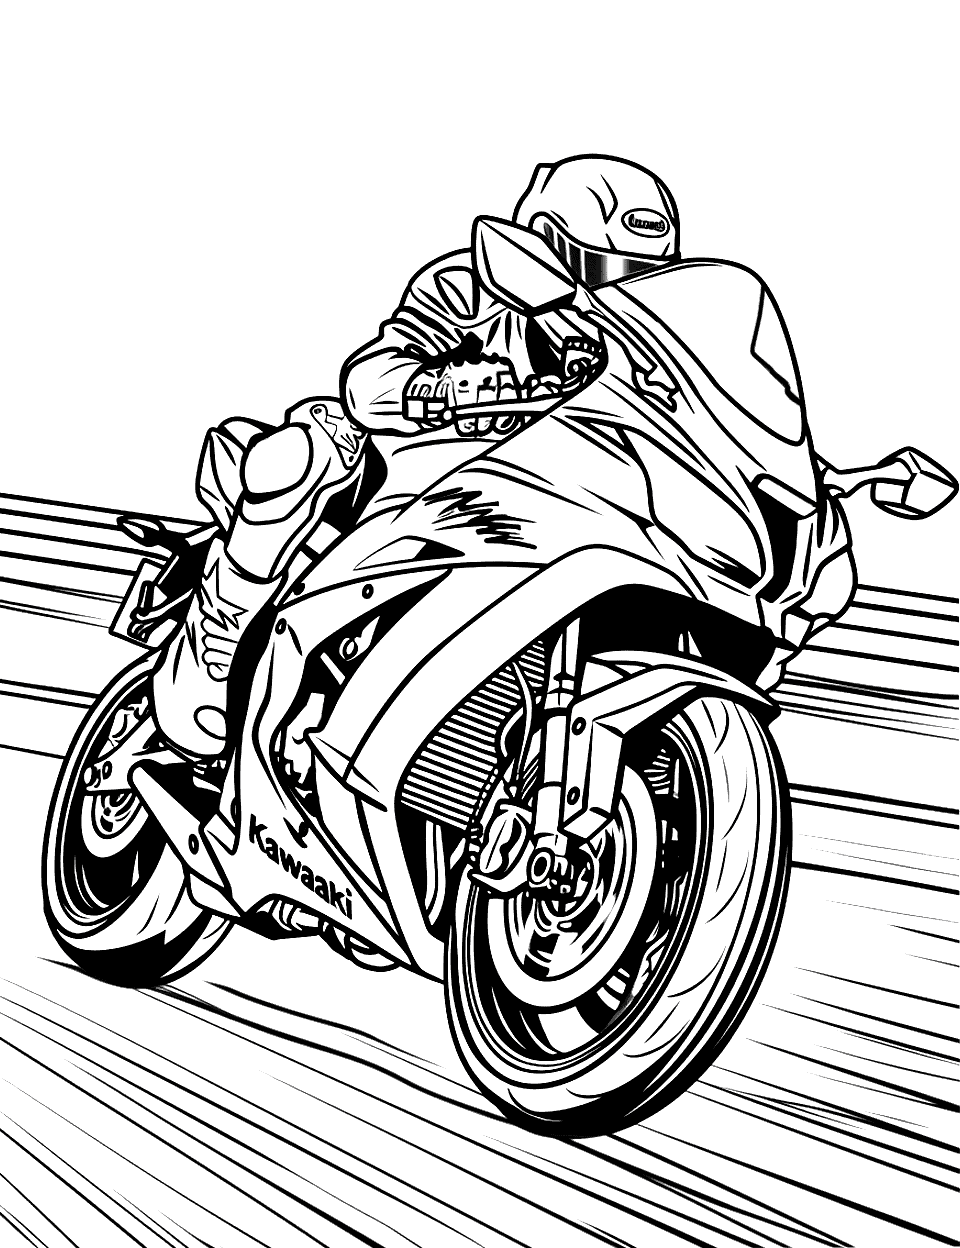 Kawasaki Ninja on the Move Motorcycle Coloring Page - A Kawasaki Ninja motorcycle speeding on a highway, rider focused ahead.